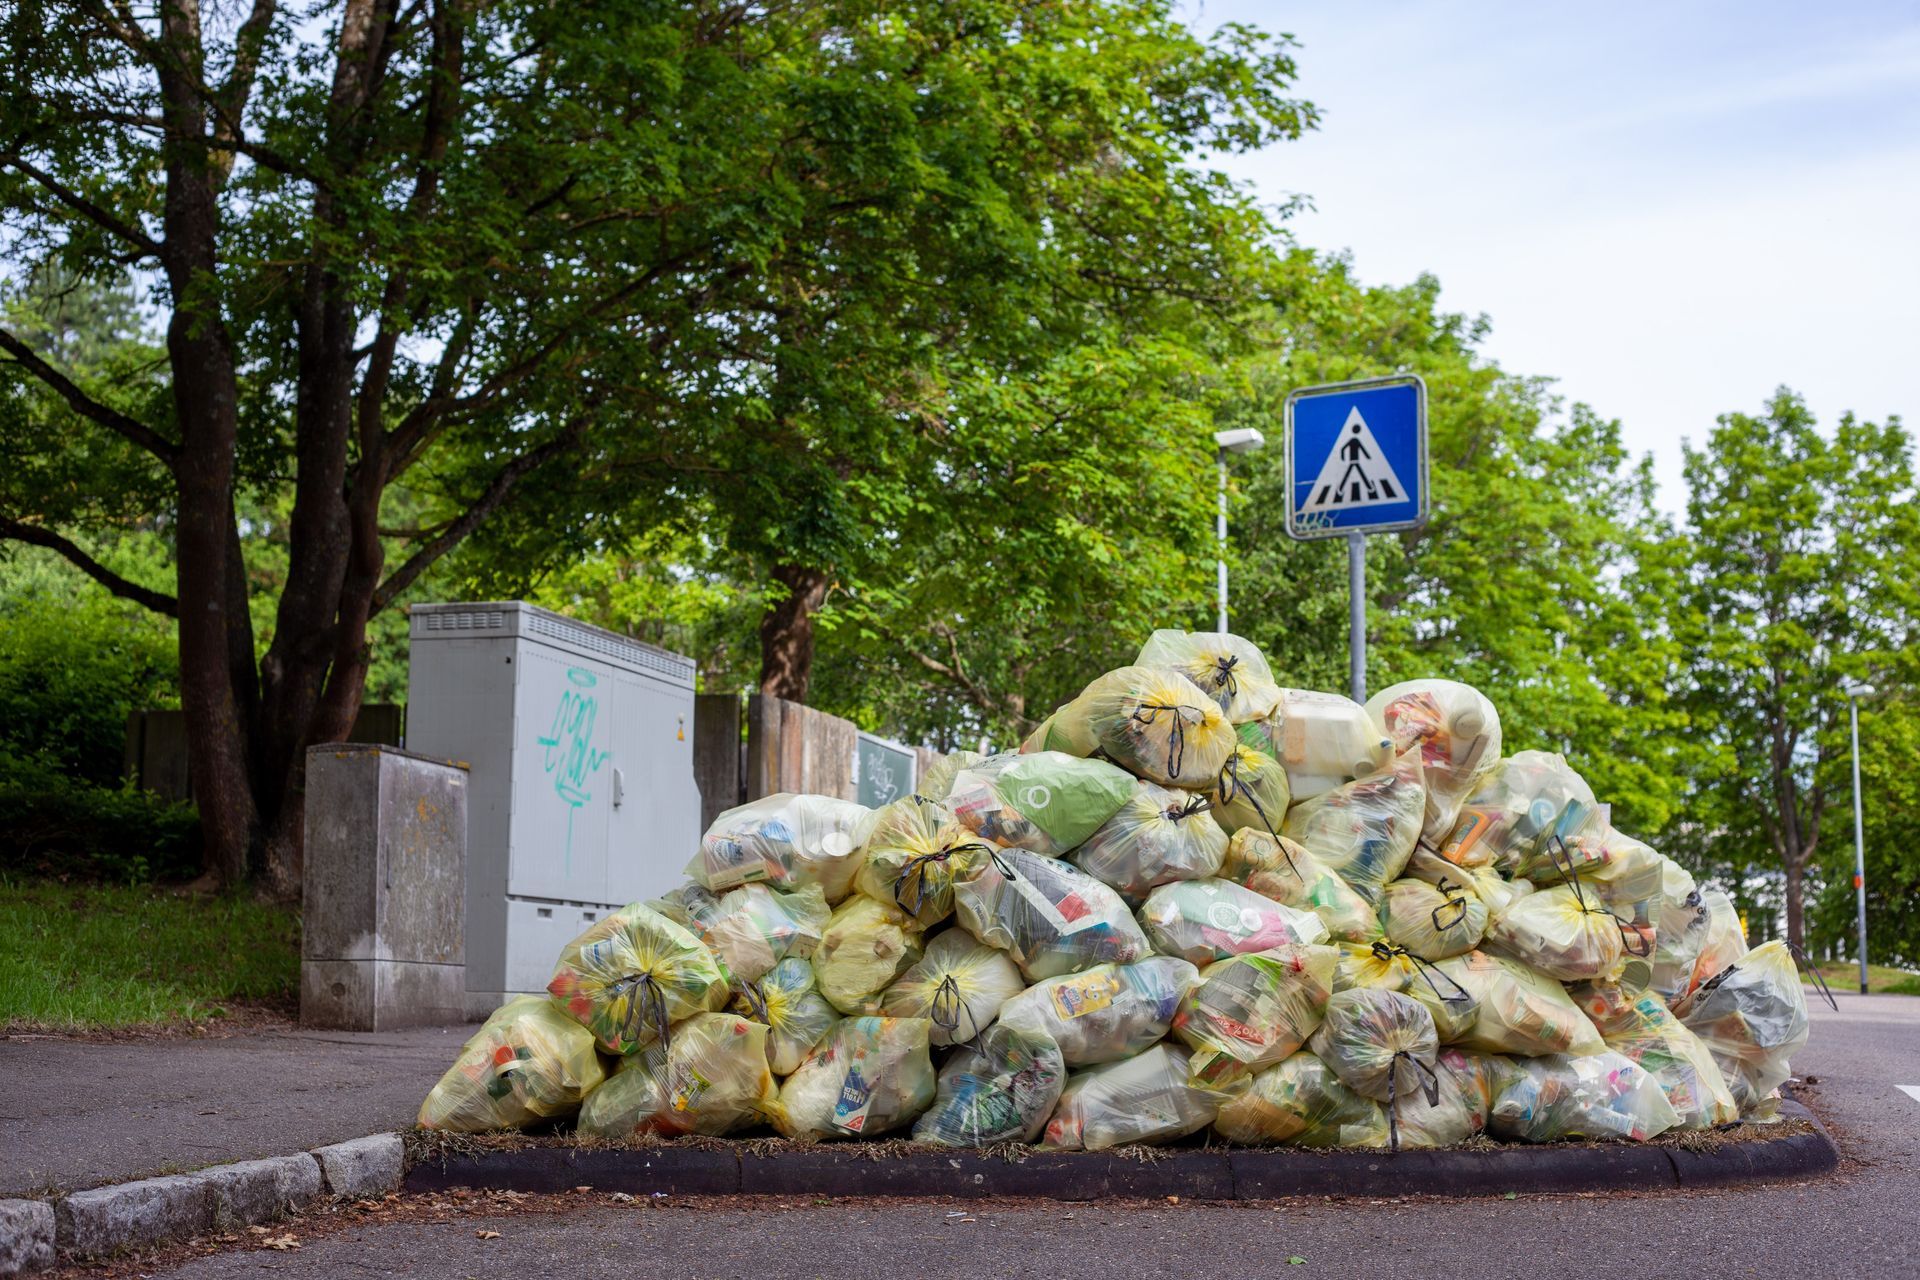 acomulación de basura por falta de gestión de residuos adecuada